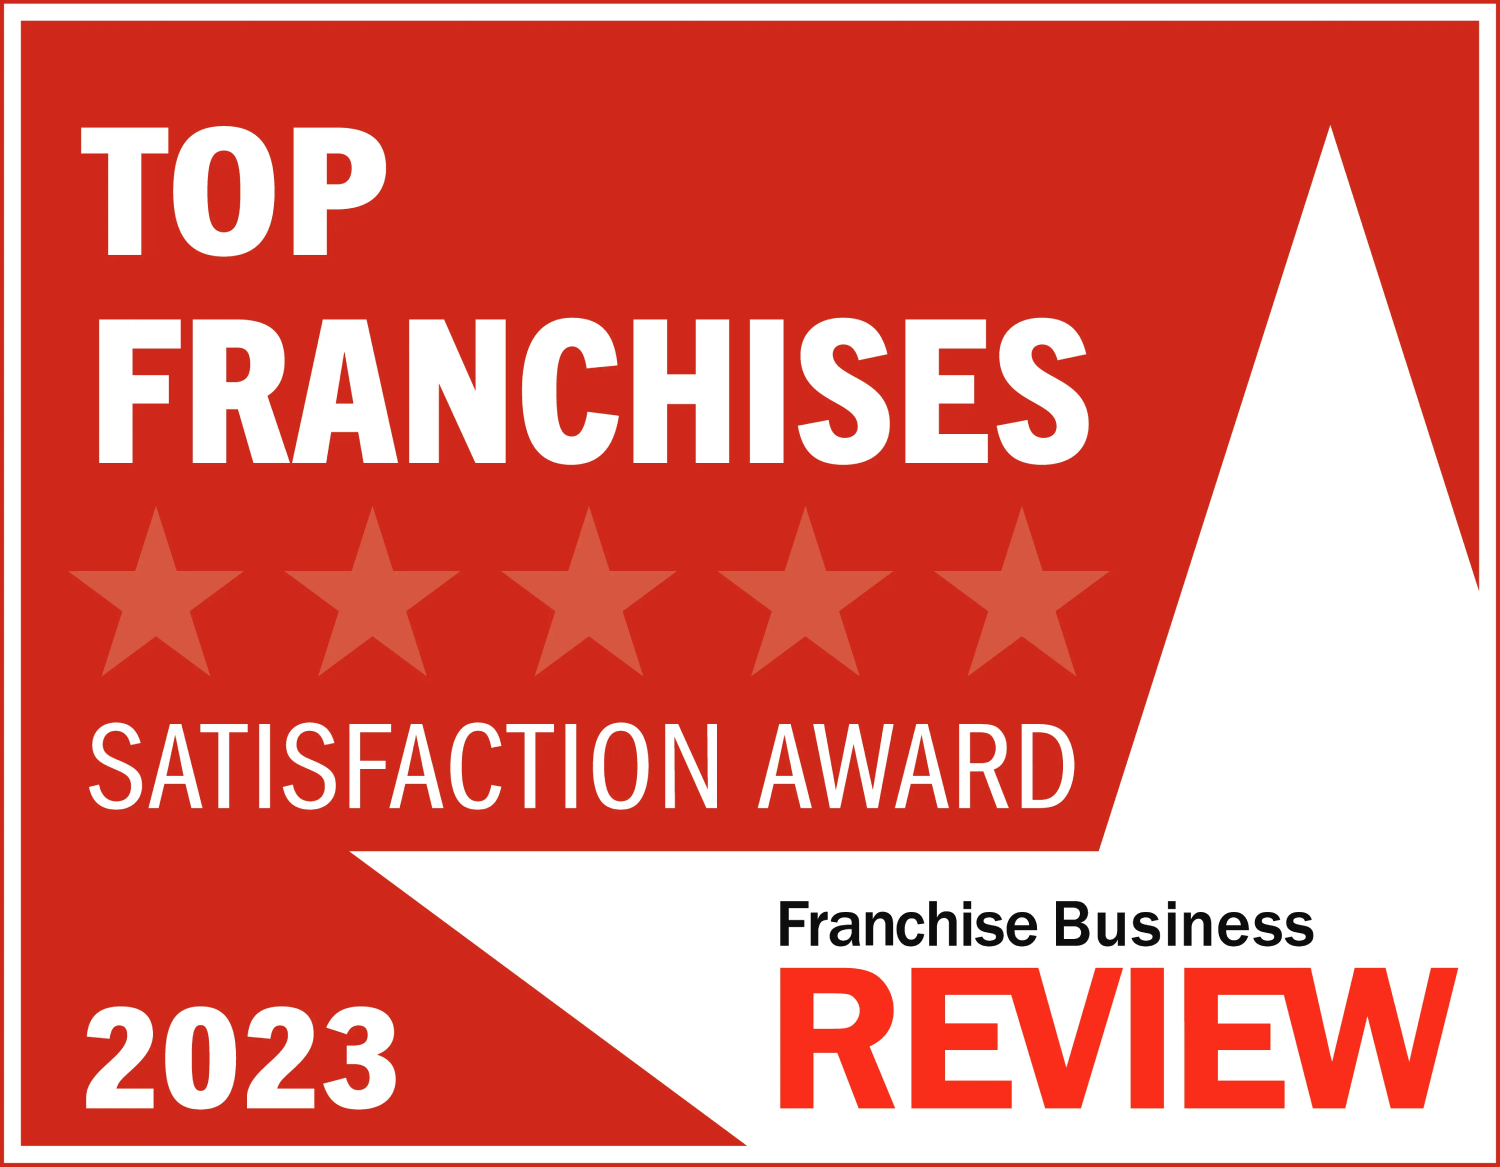 Franchise Business Review Top Franchises  - 2023